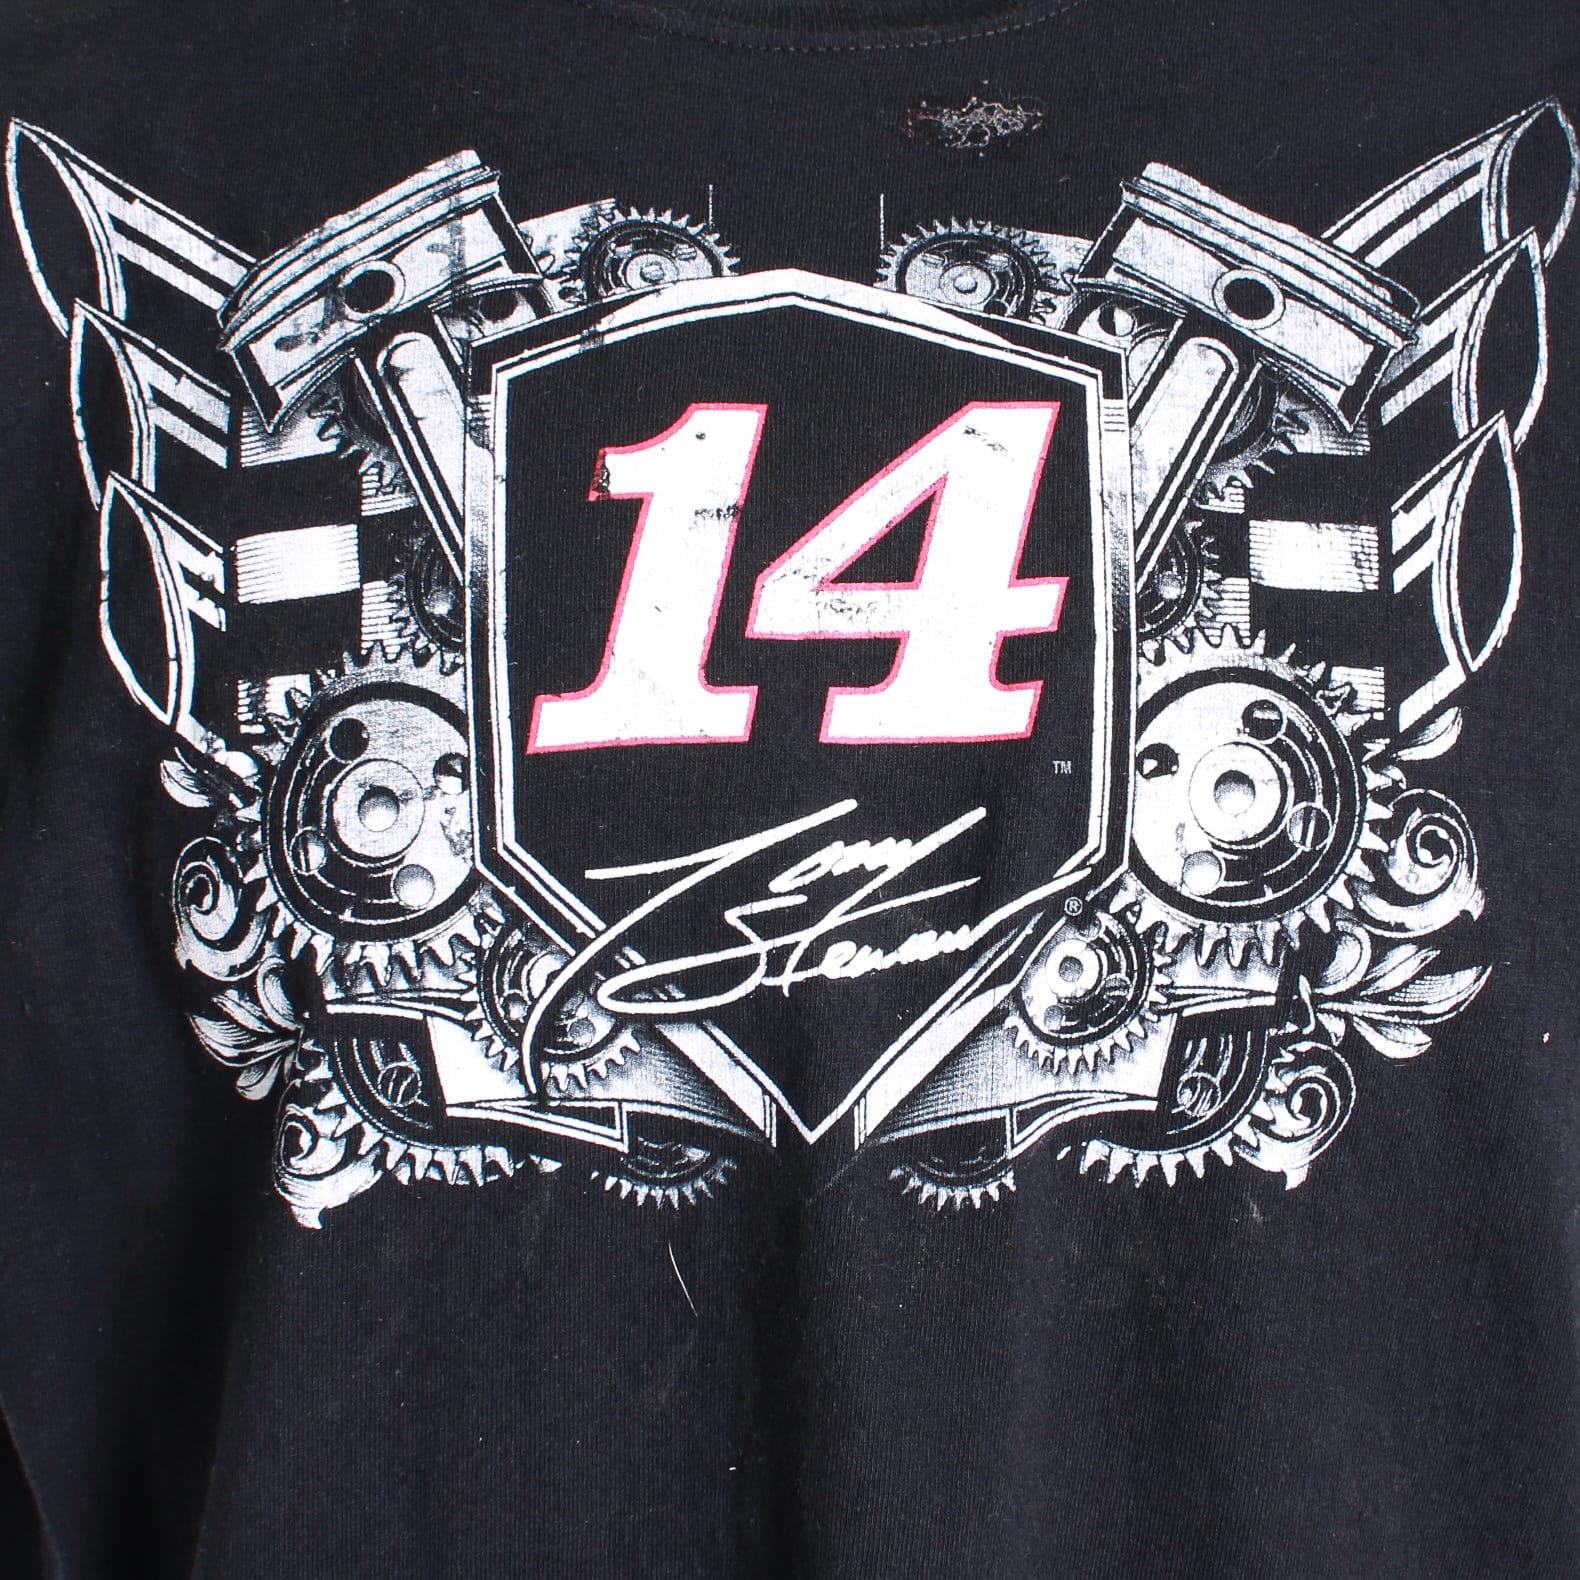 Vintage '14' NASCAR T-Shirt - American Madness